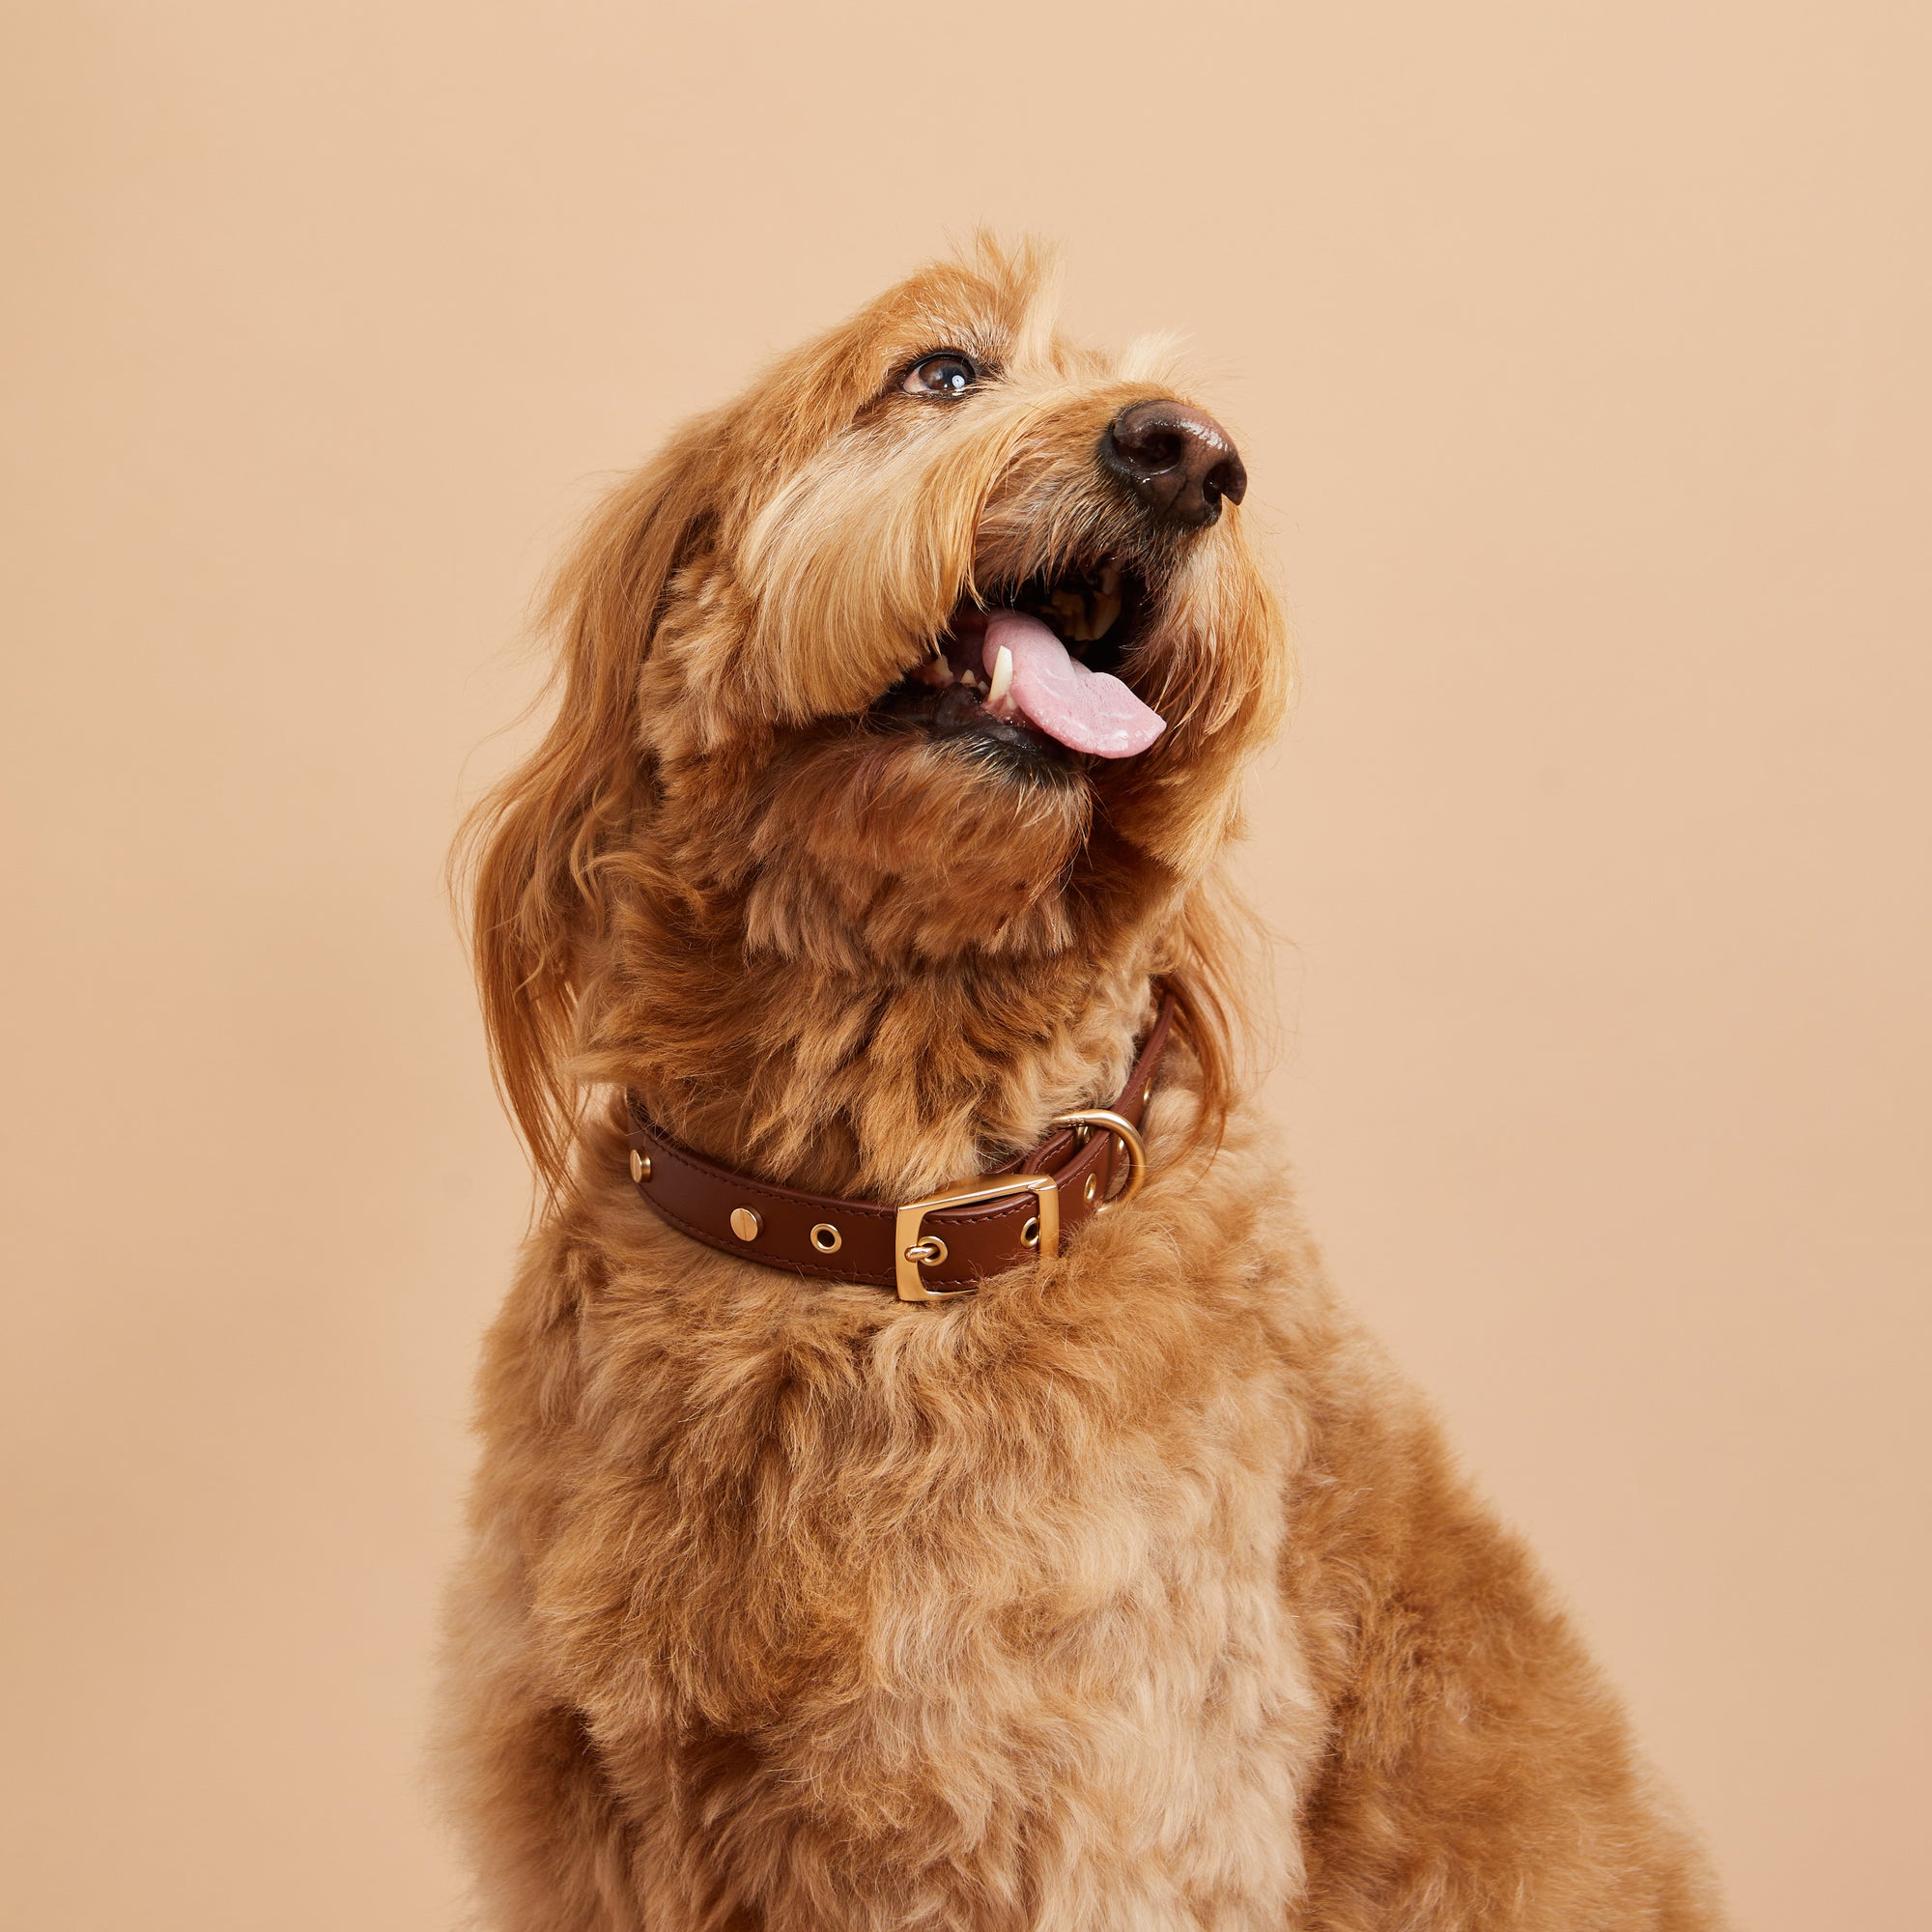  Preppy Boy Plaid Waterproof and Odorproof Dog Collar - Medium  - 20 Inch Long x 3/4 Inch Wide - : Pet Supplies